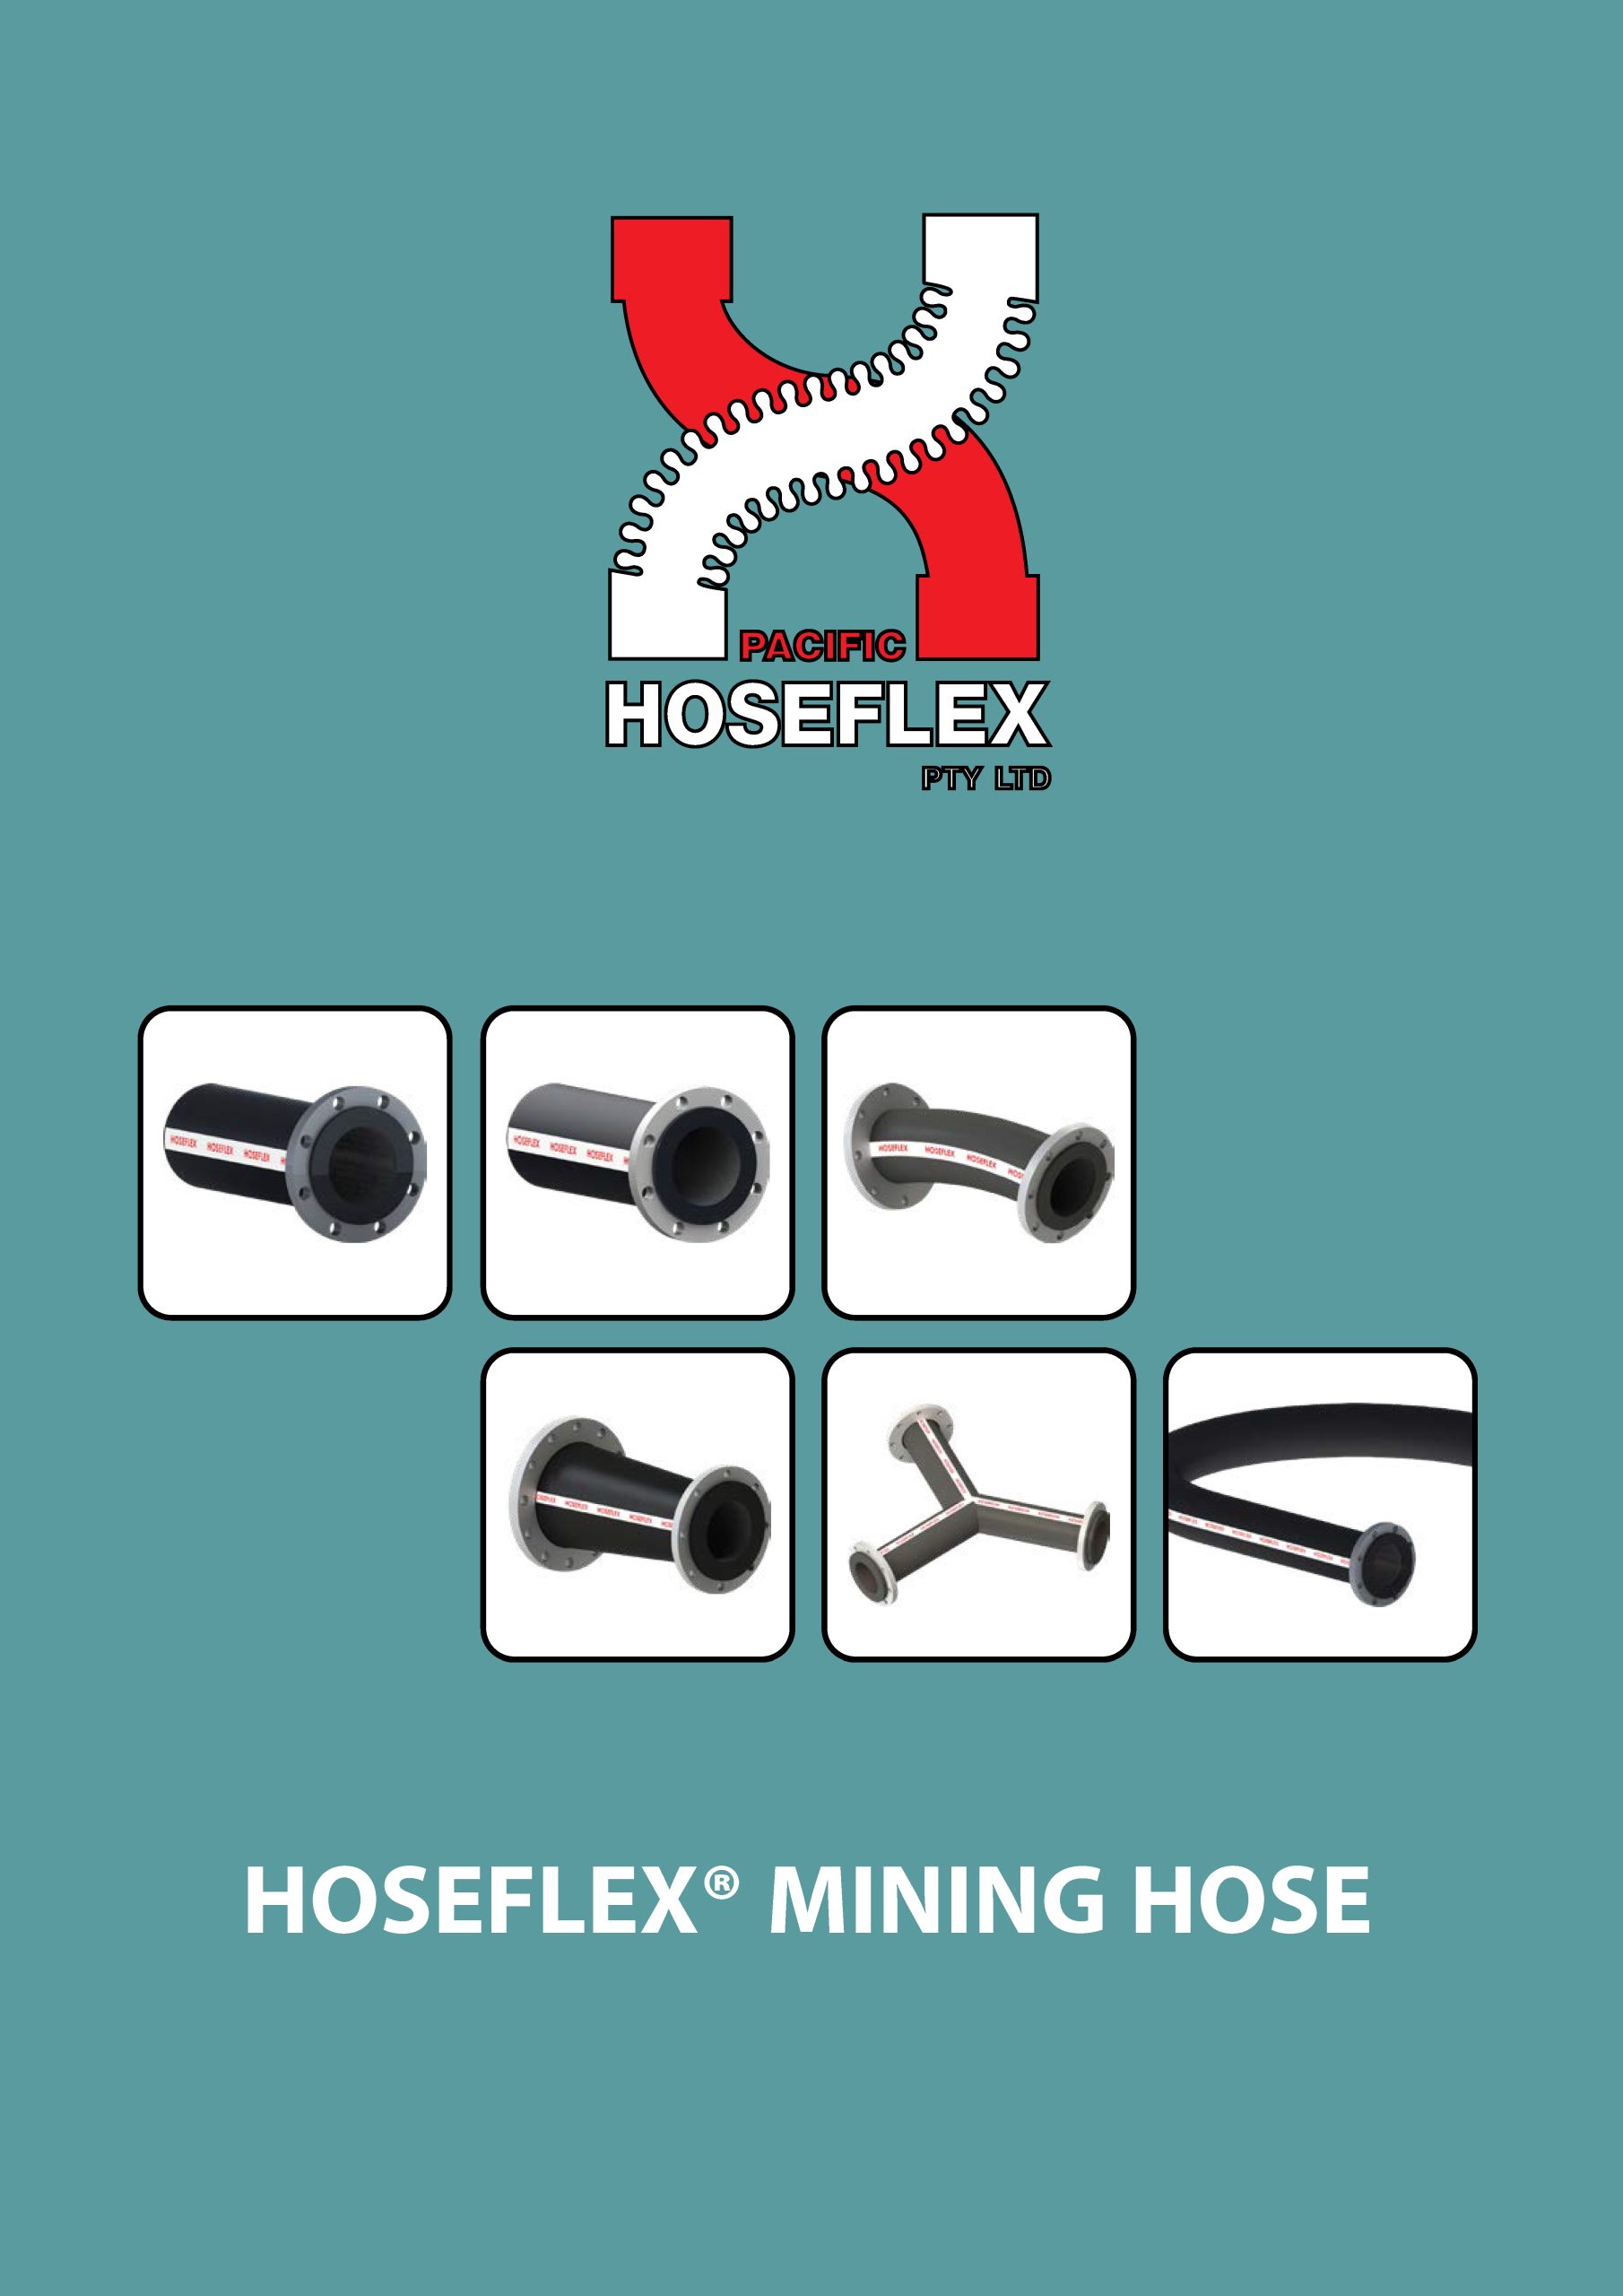 Hoseflex Mining Hose Pdf Image